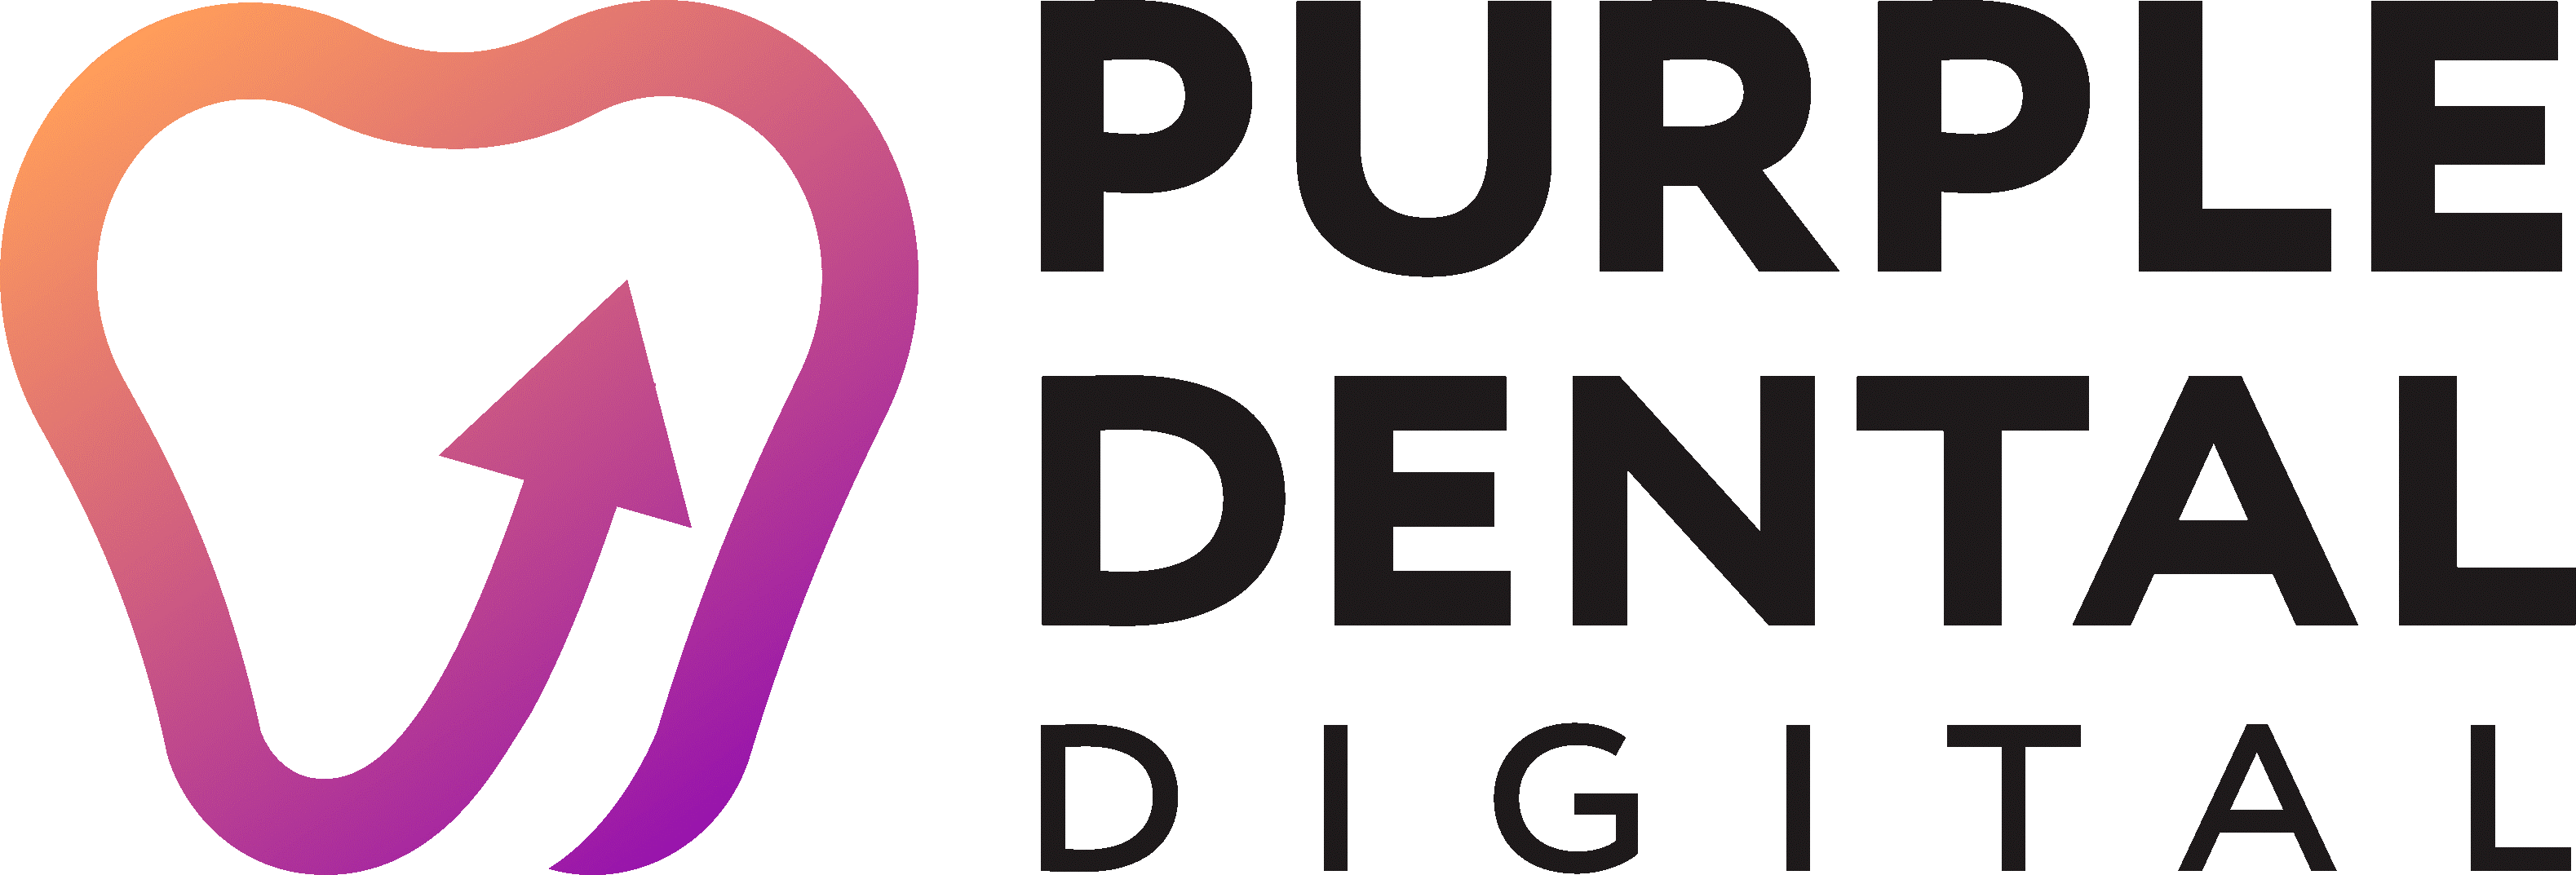 Purple Dental Digital